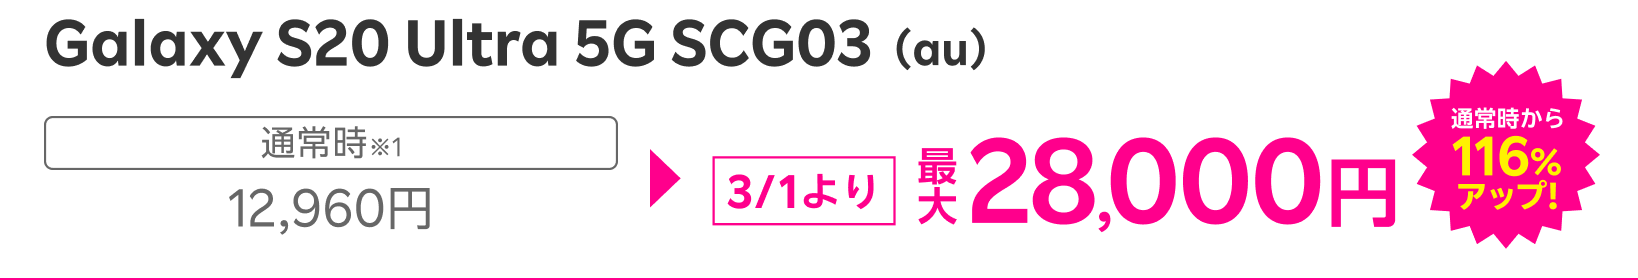 Galaxy S20 Ultra 5G SCG03（au） 3/1より最大28,000円 通常時から116%アップ!